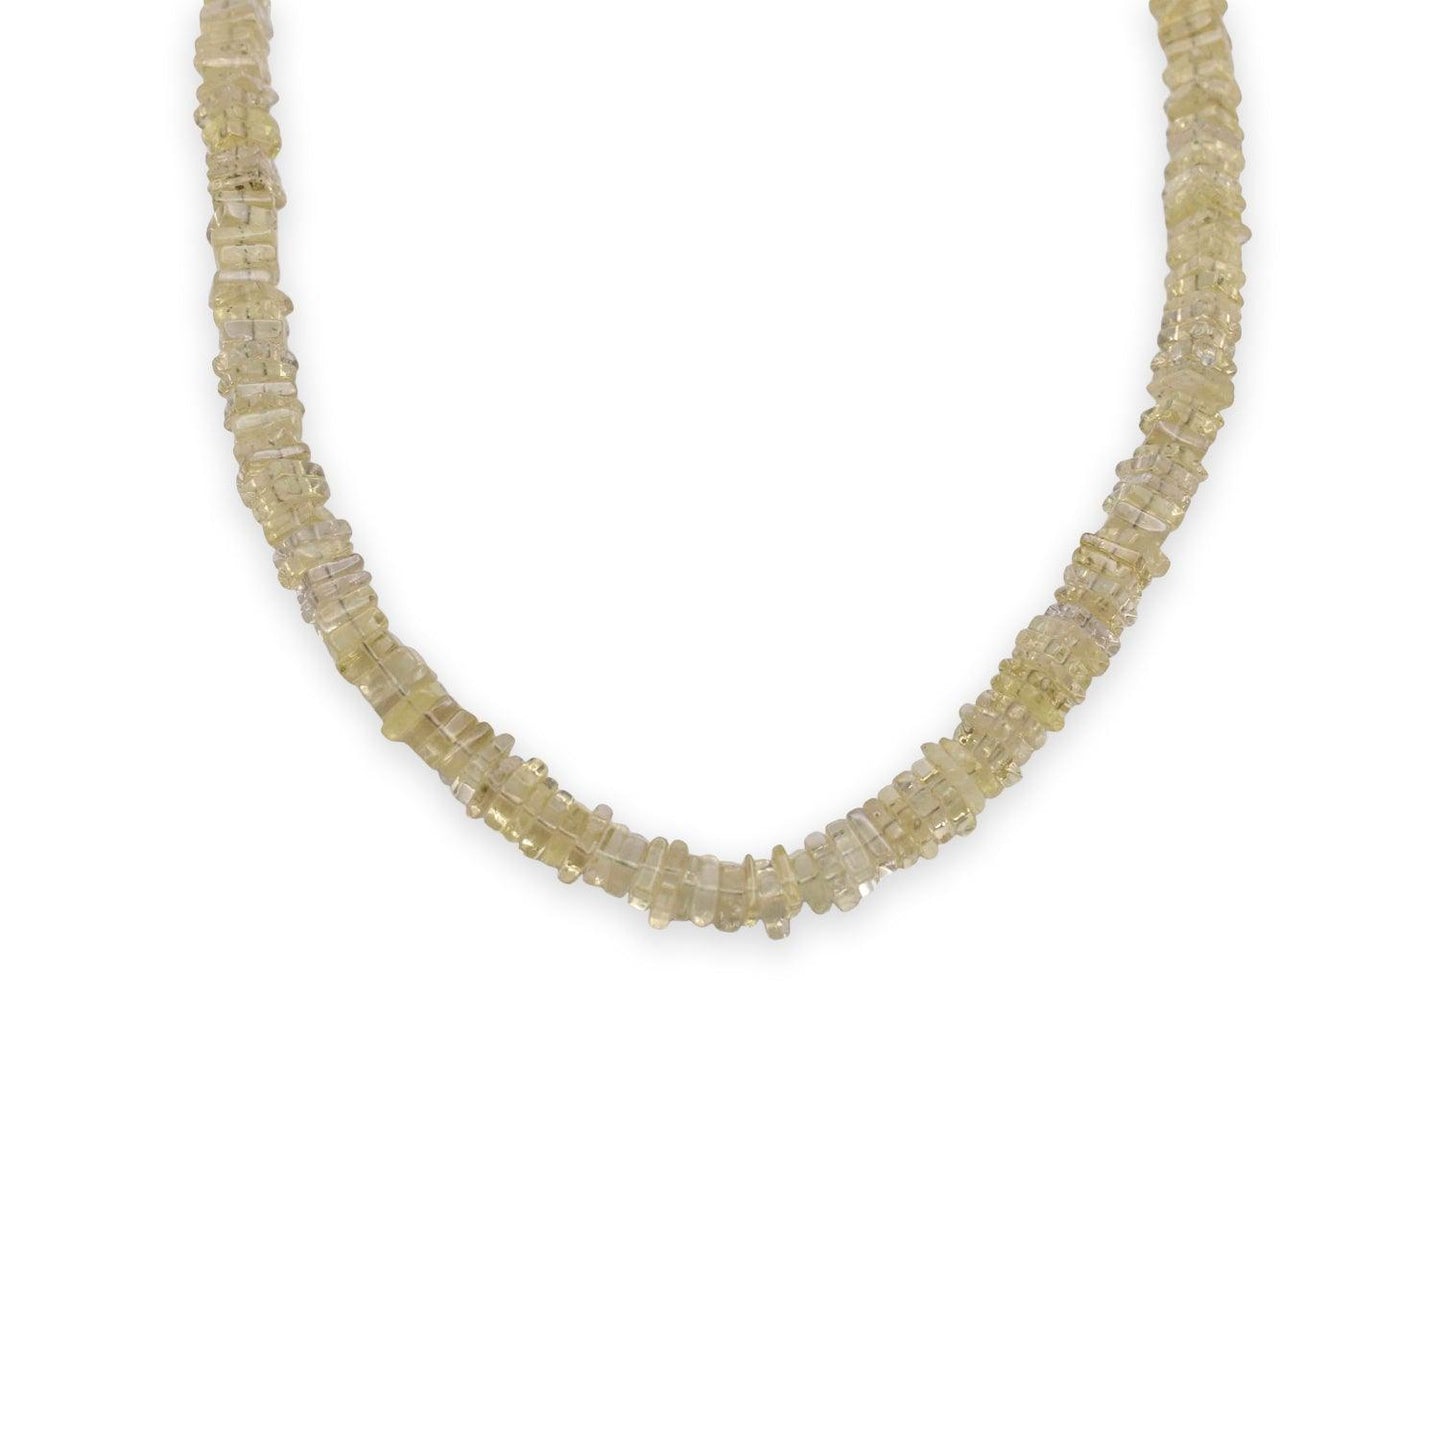 Lemon quartz heishi beads necklace